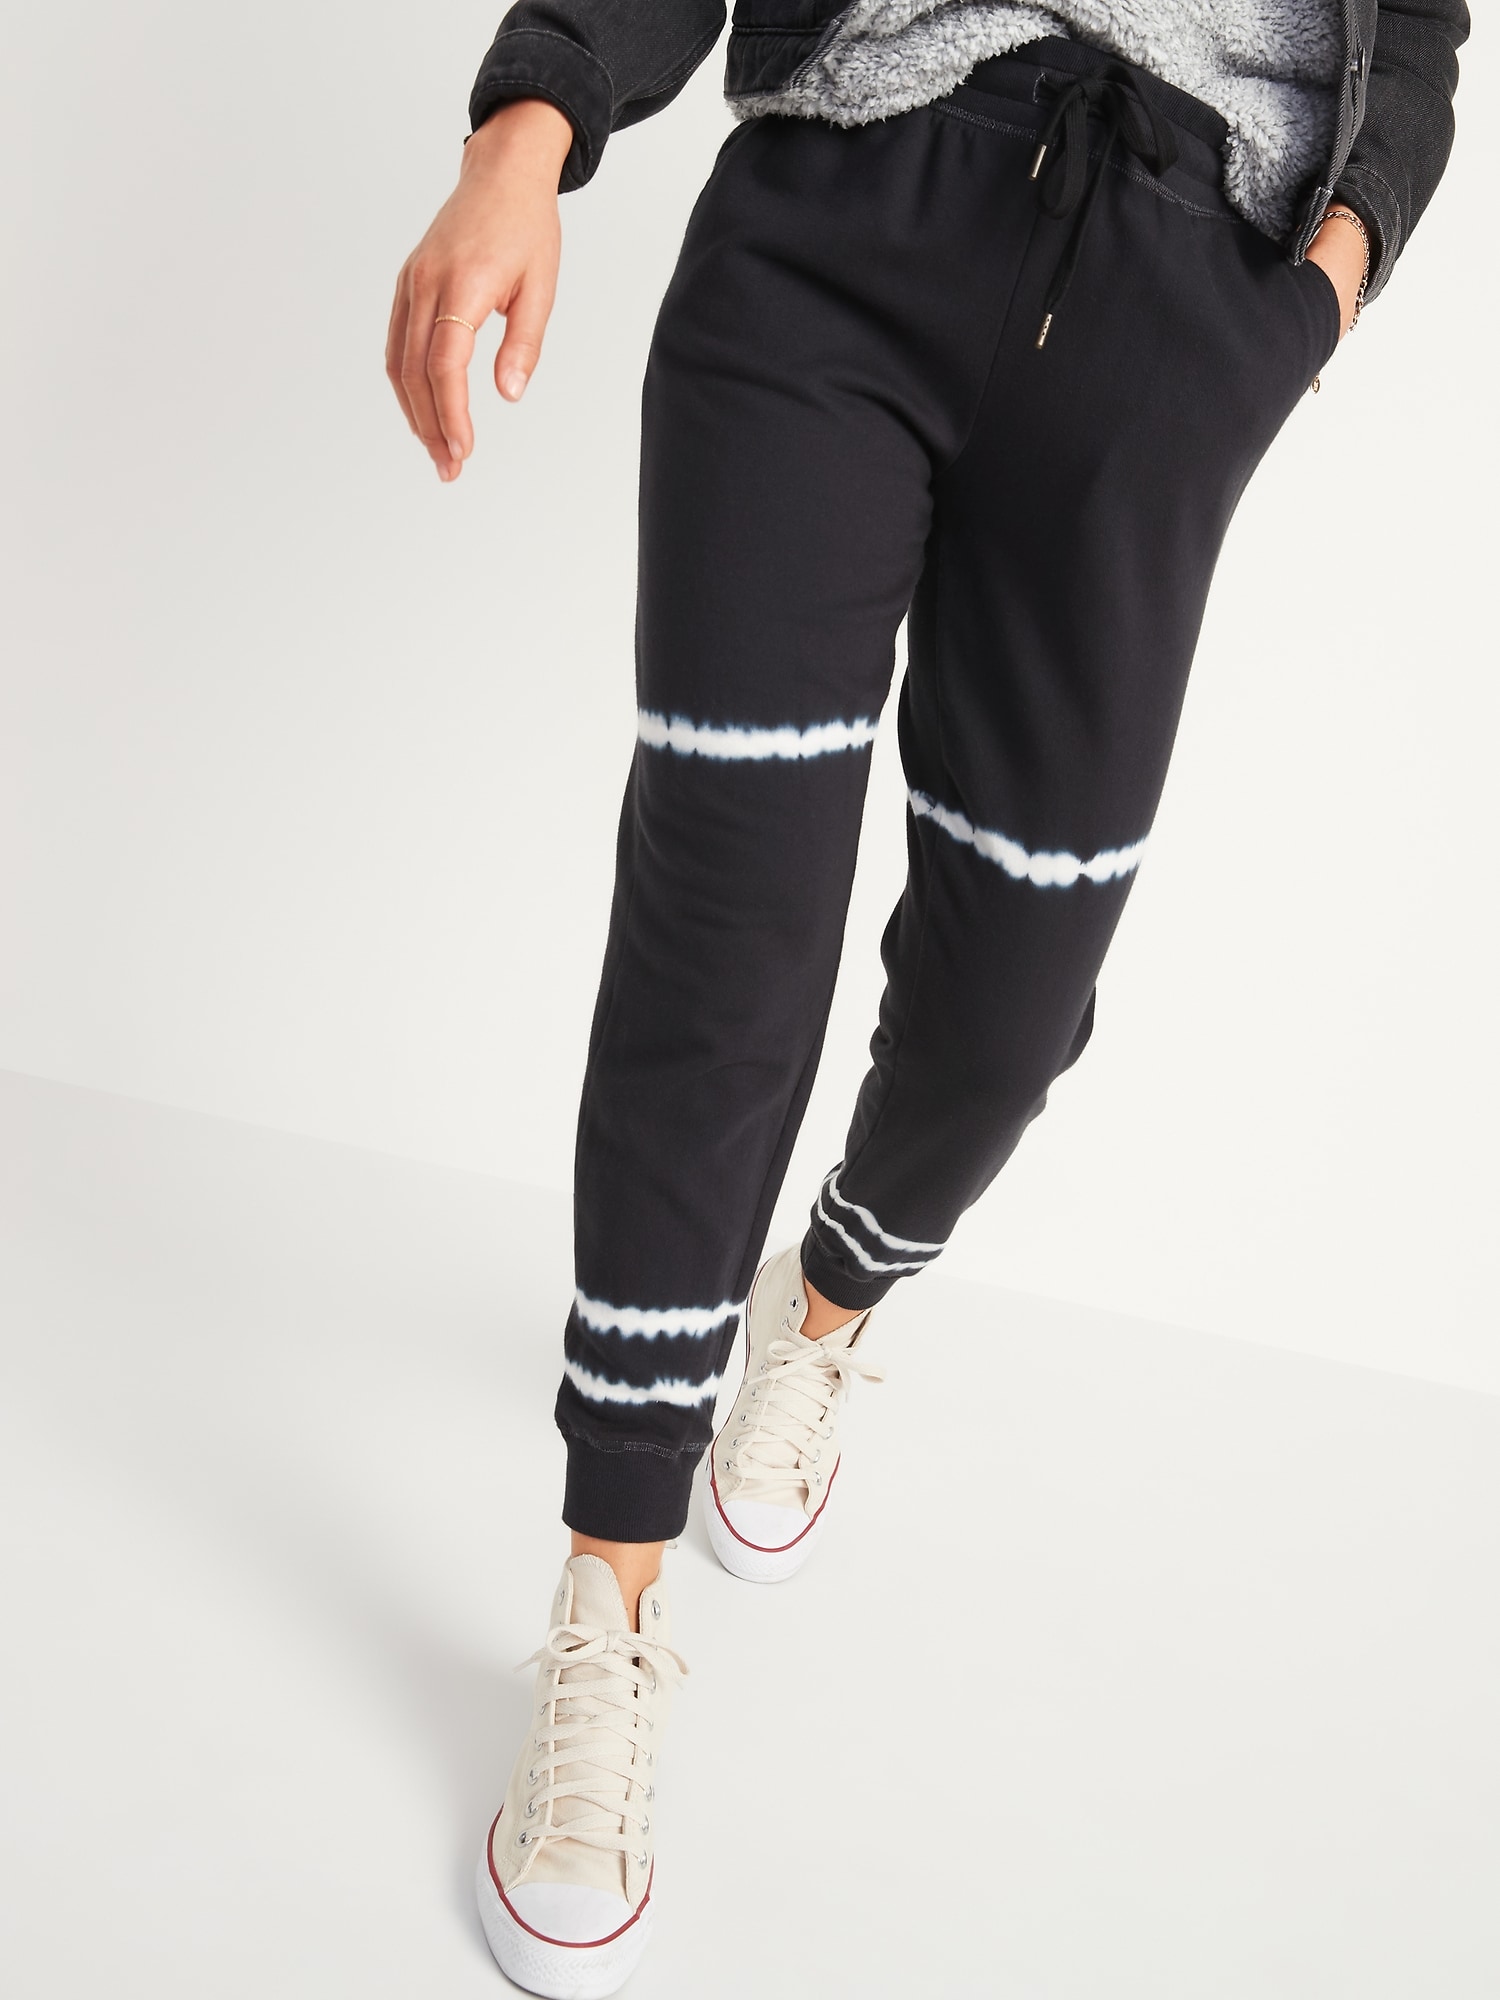 OLD NAVY Womens Mid-Rise Vintage Street Jogger Sweatpants : BLACK - Medium  Tall